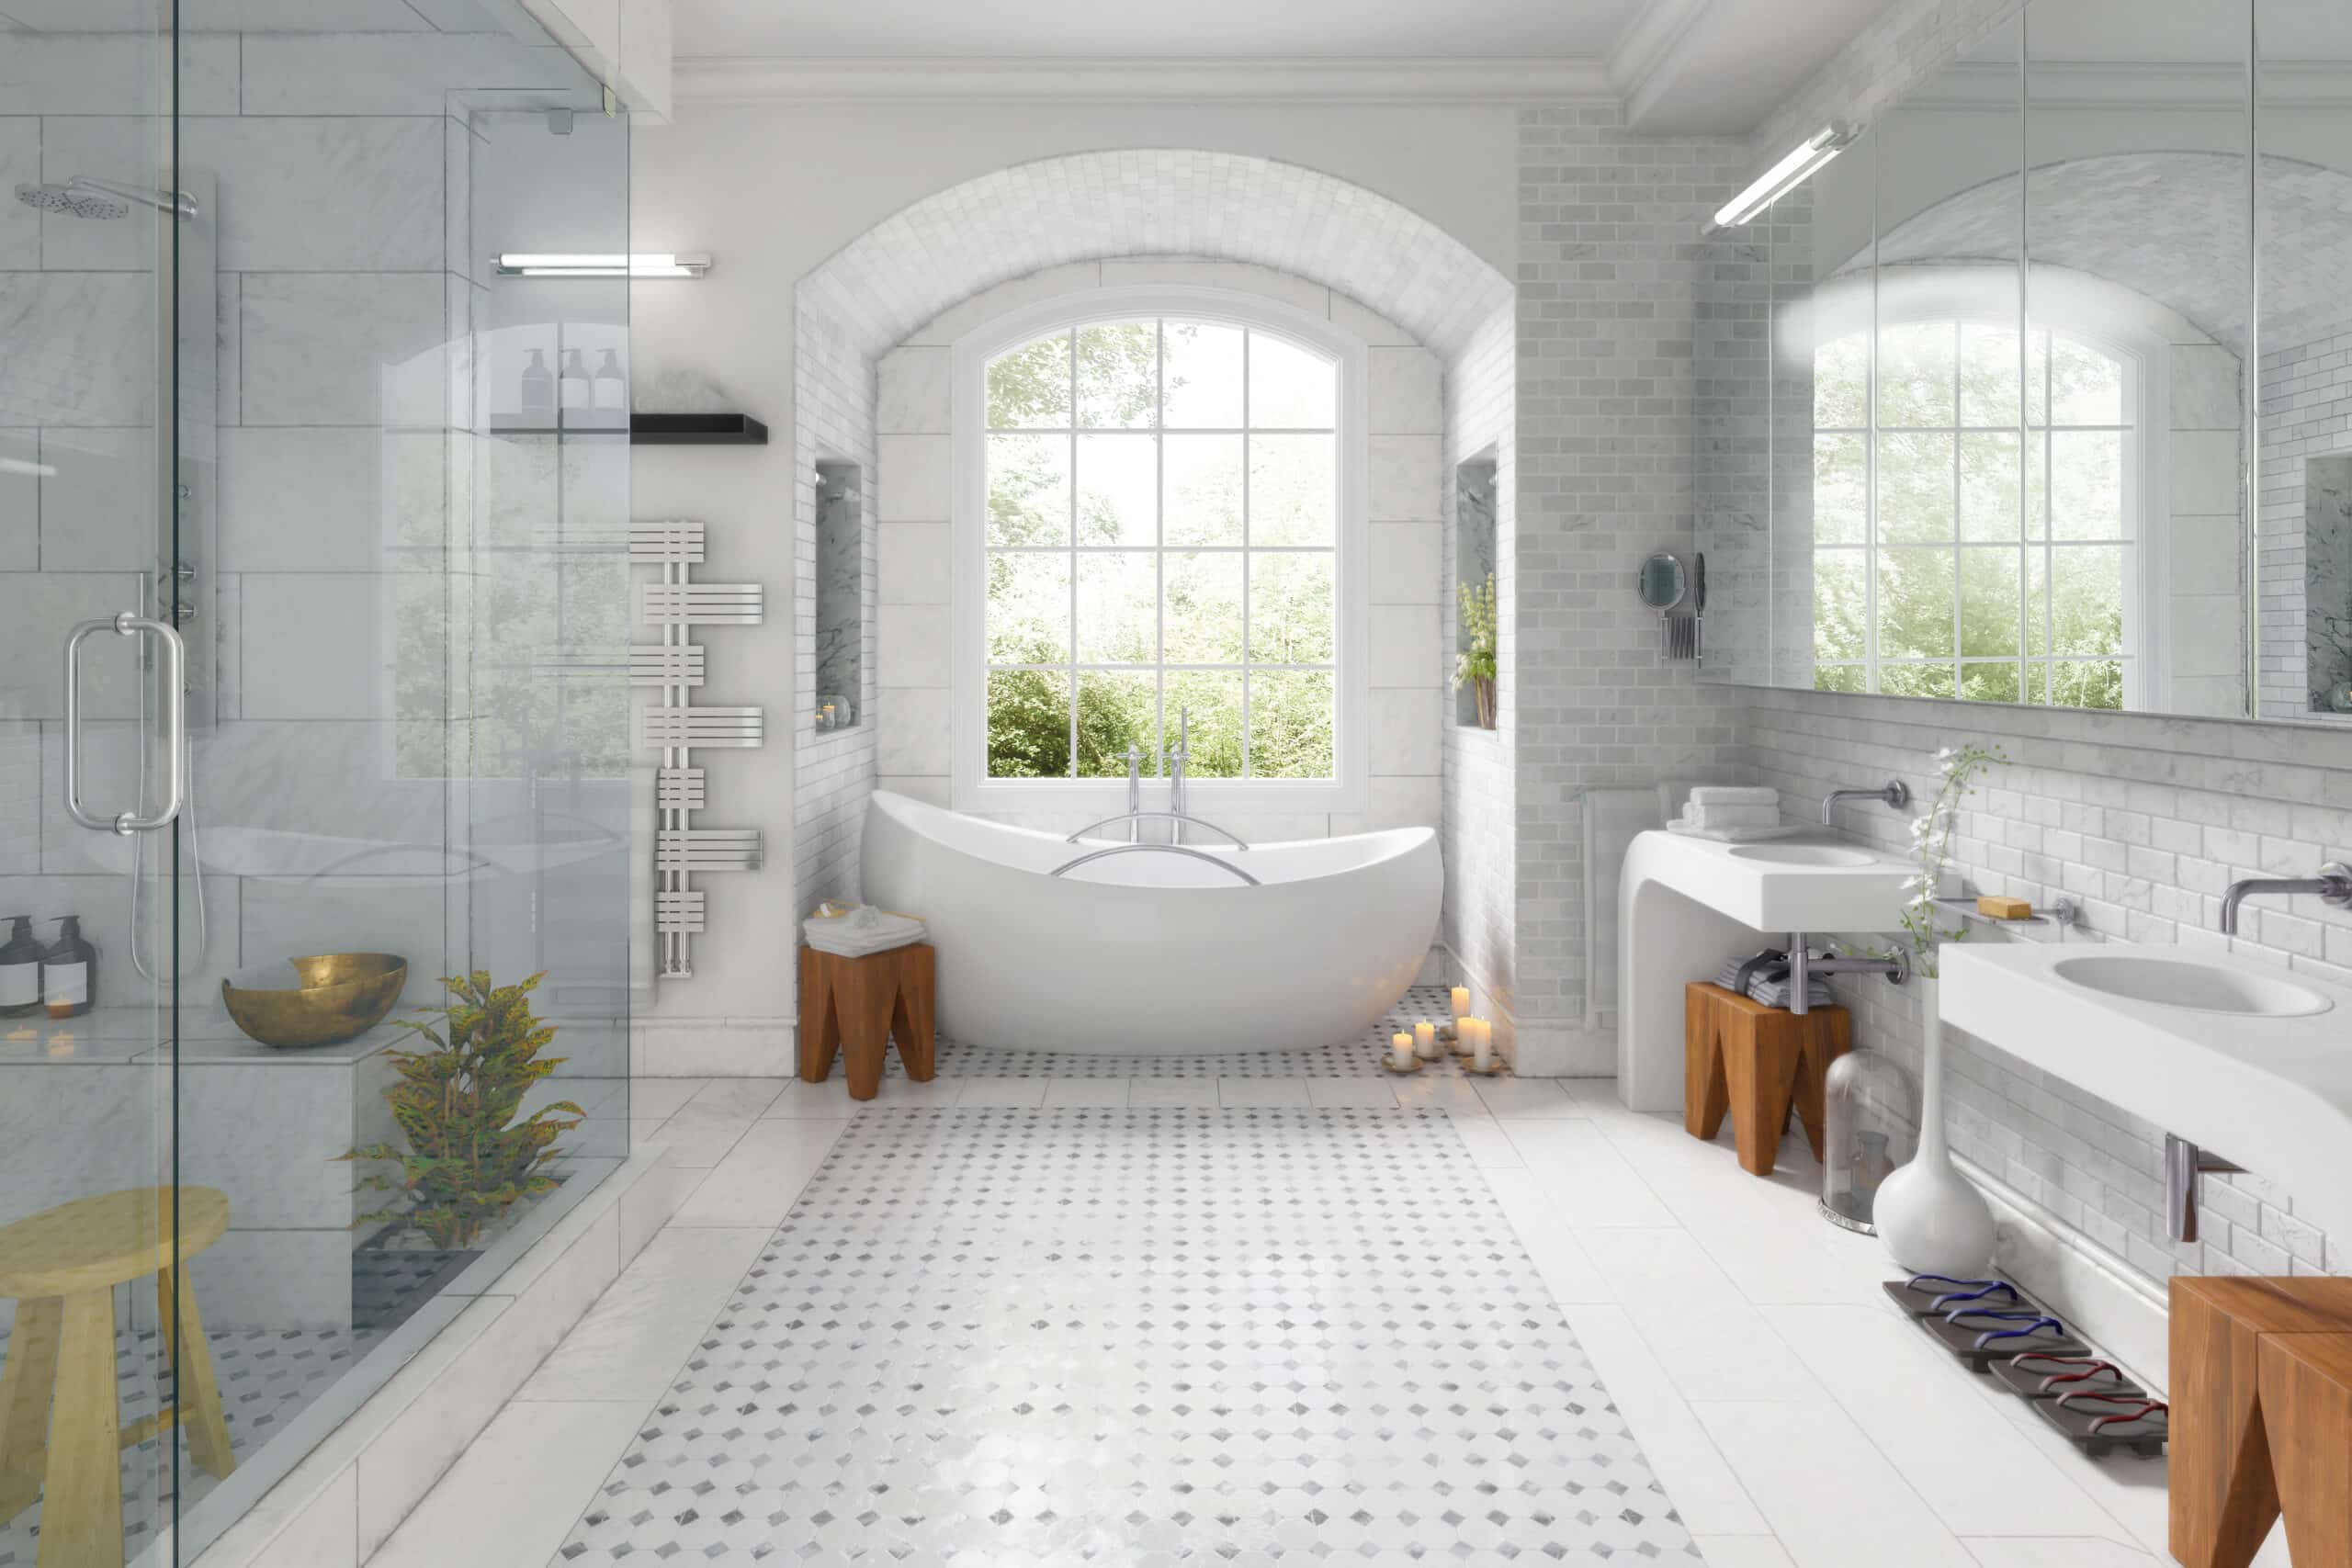 Mediterranean bathroom style with white bathroom vanities and bath tub